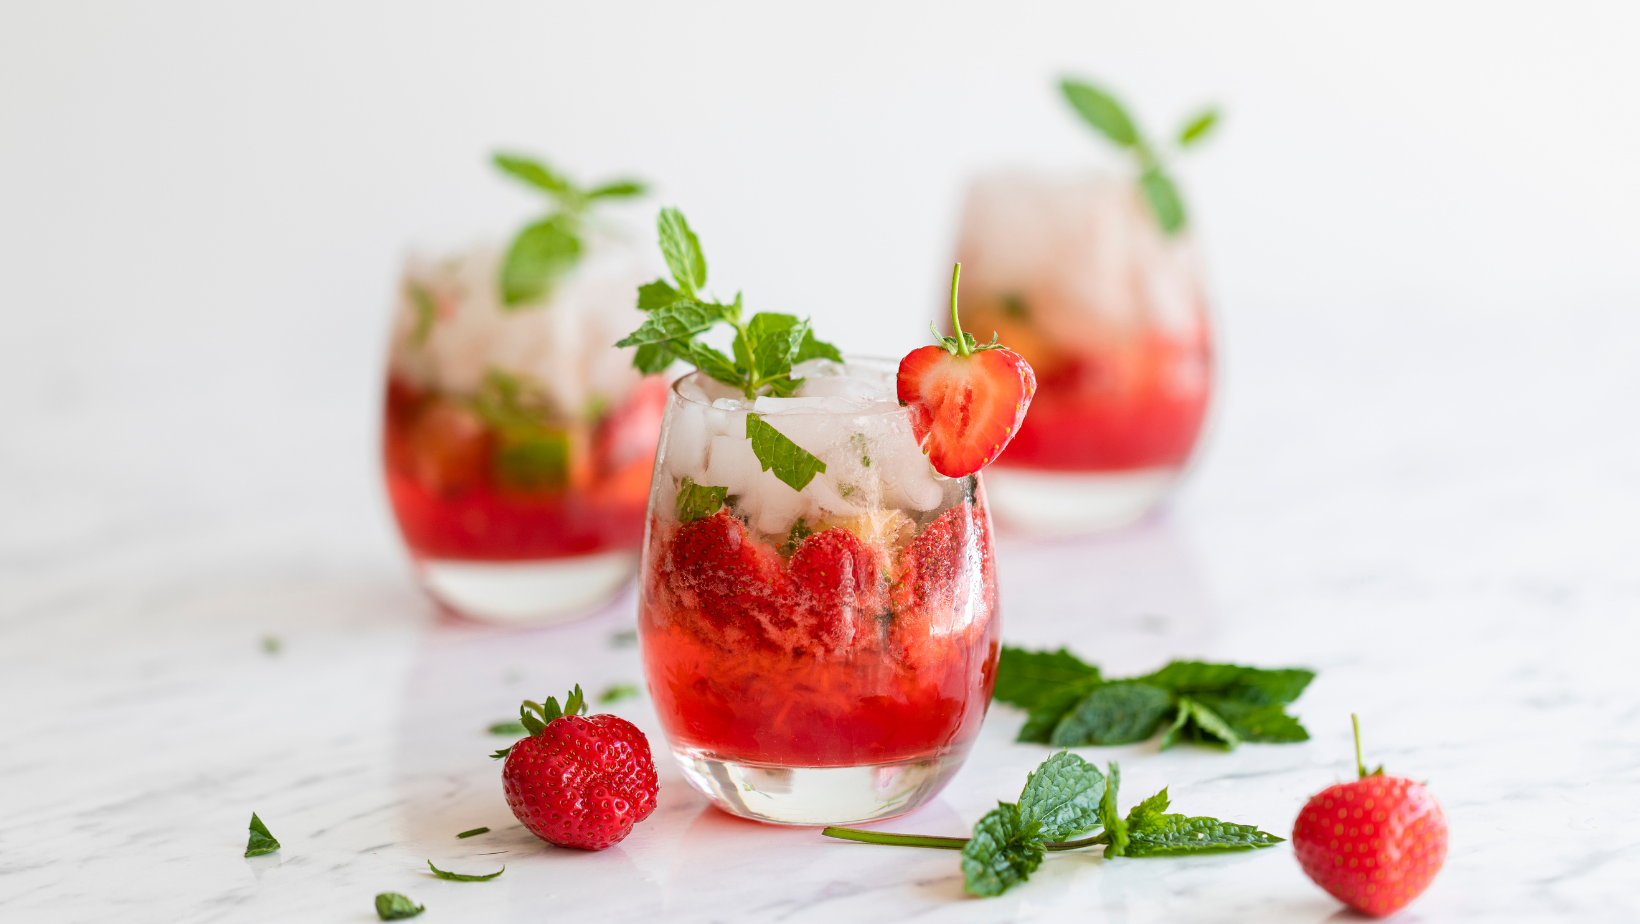 A Very Merry Strawberry Mojito 🍓